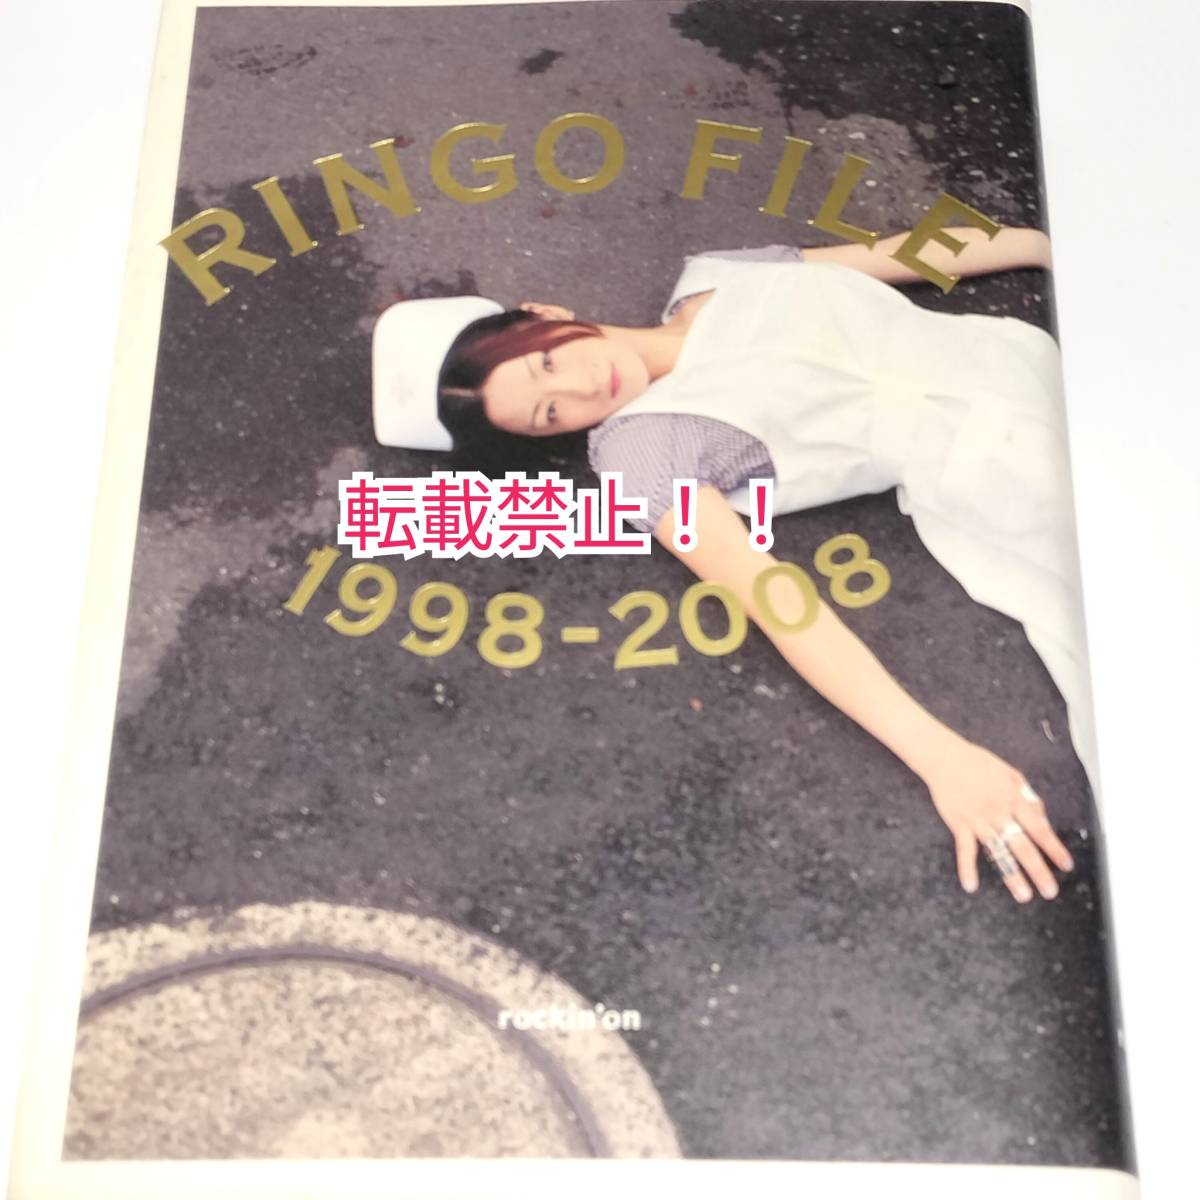 Ringo file 1998ー2008☆初版 第1刷★椎名林檎★_画像1